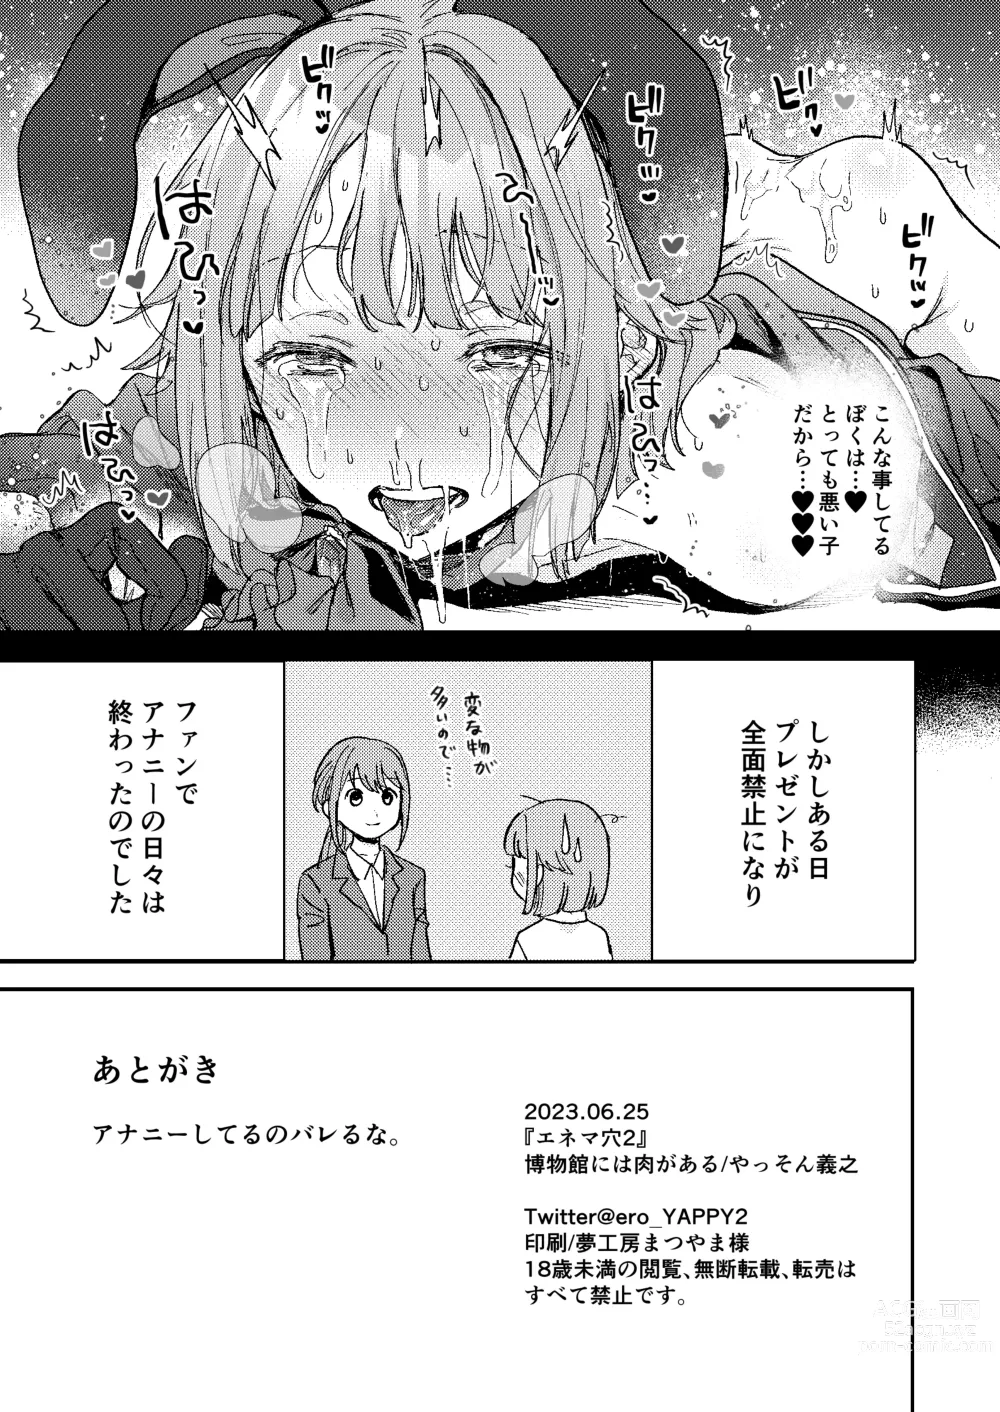 Page 18 of doujinshi Enema Ana 2